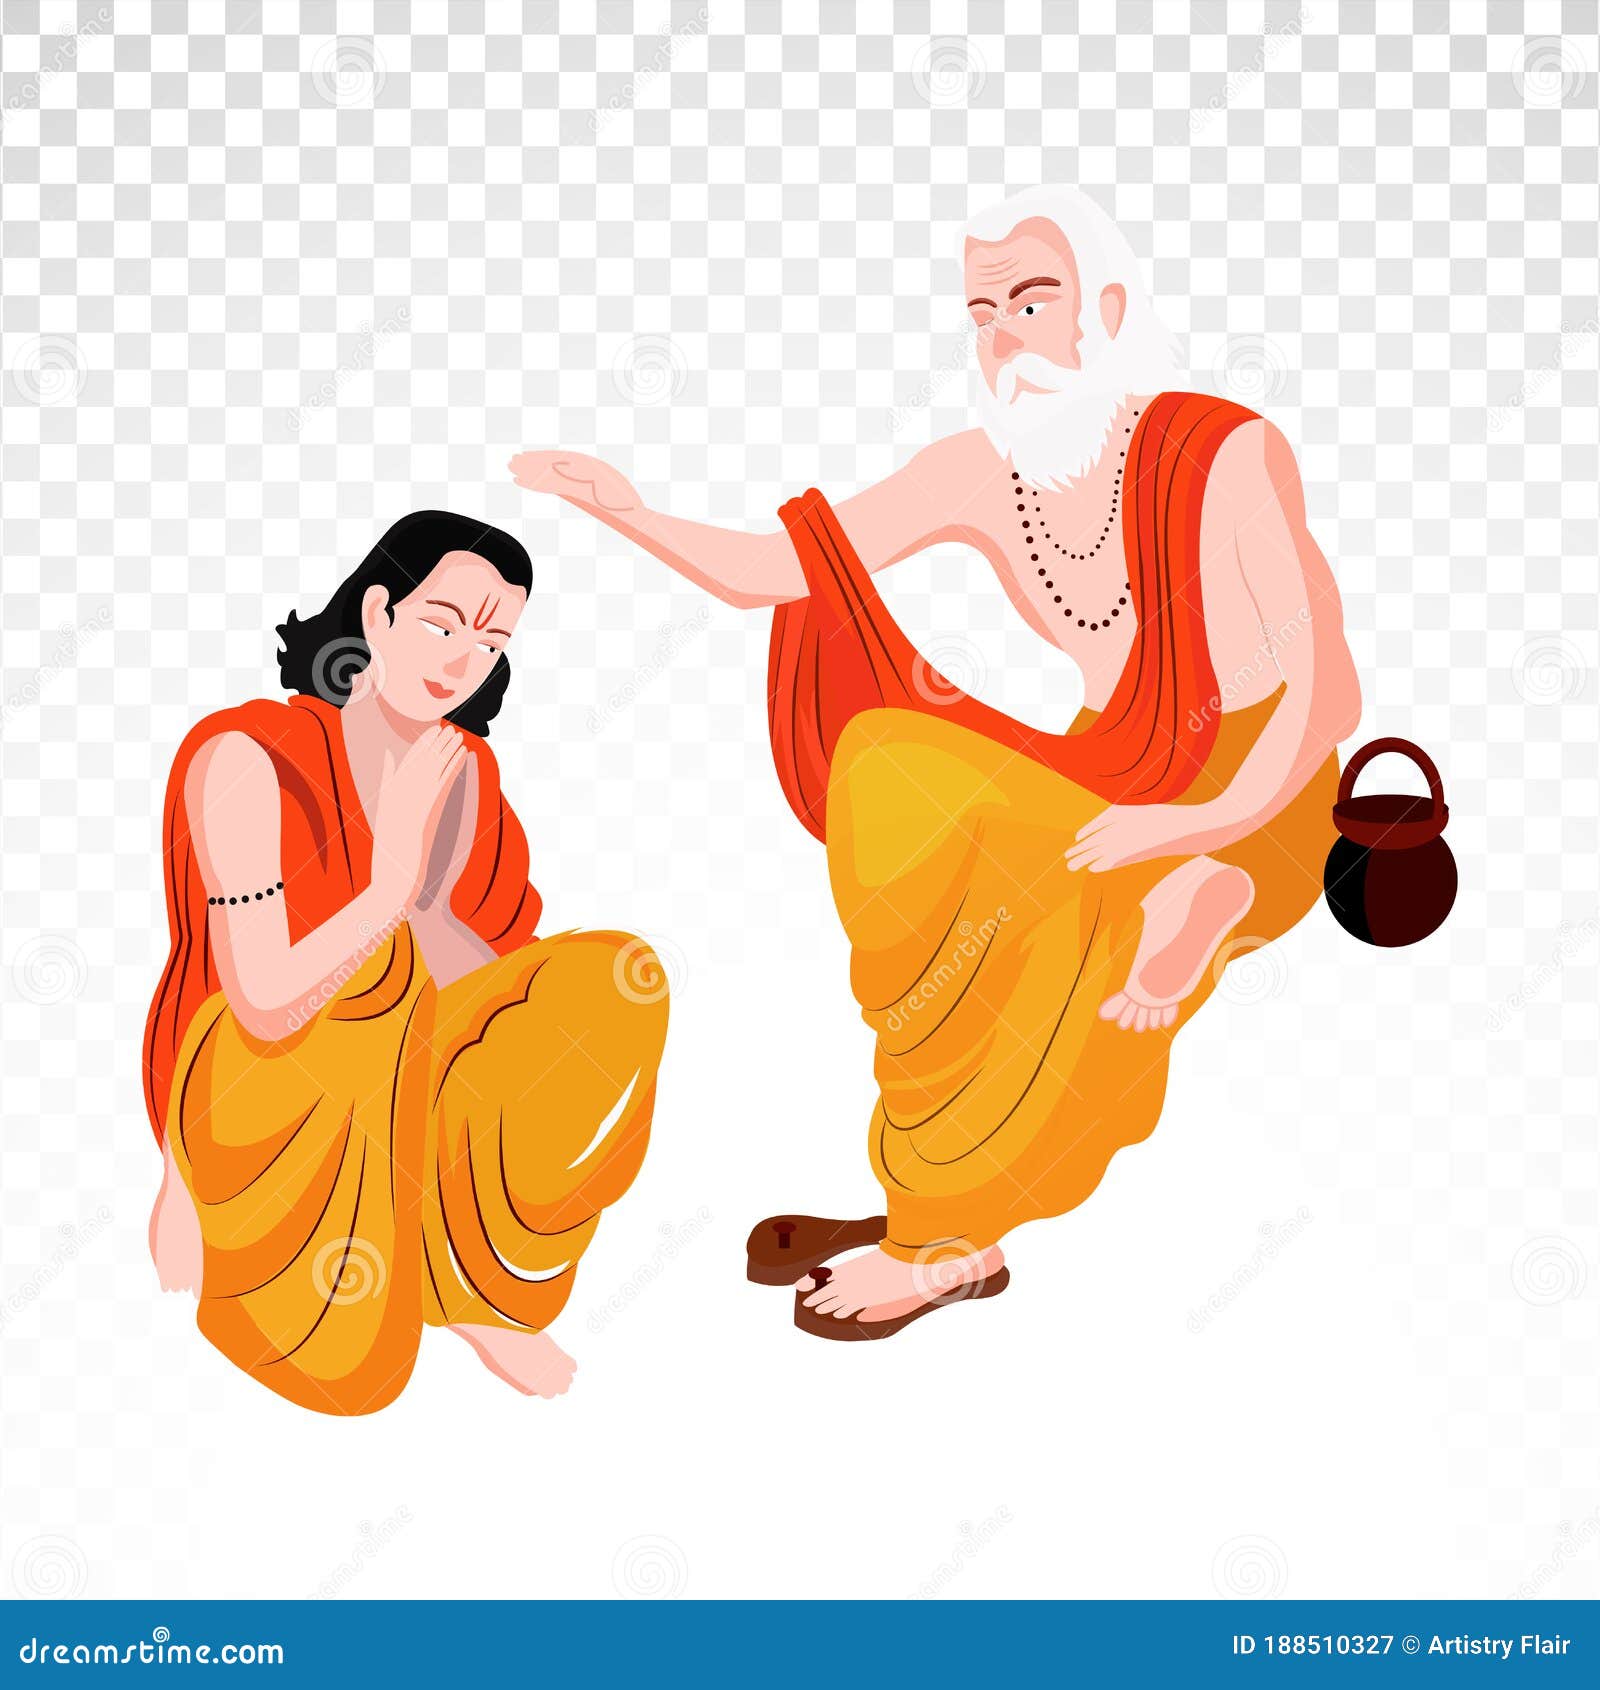 How to draw Guru Purnima drawing | Tribute to Guru teacher - YouTube-saigonsouth.com.vn